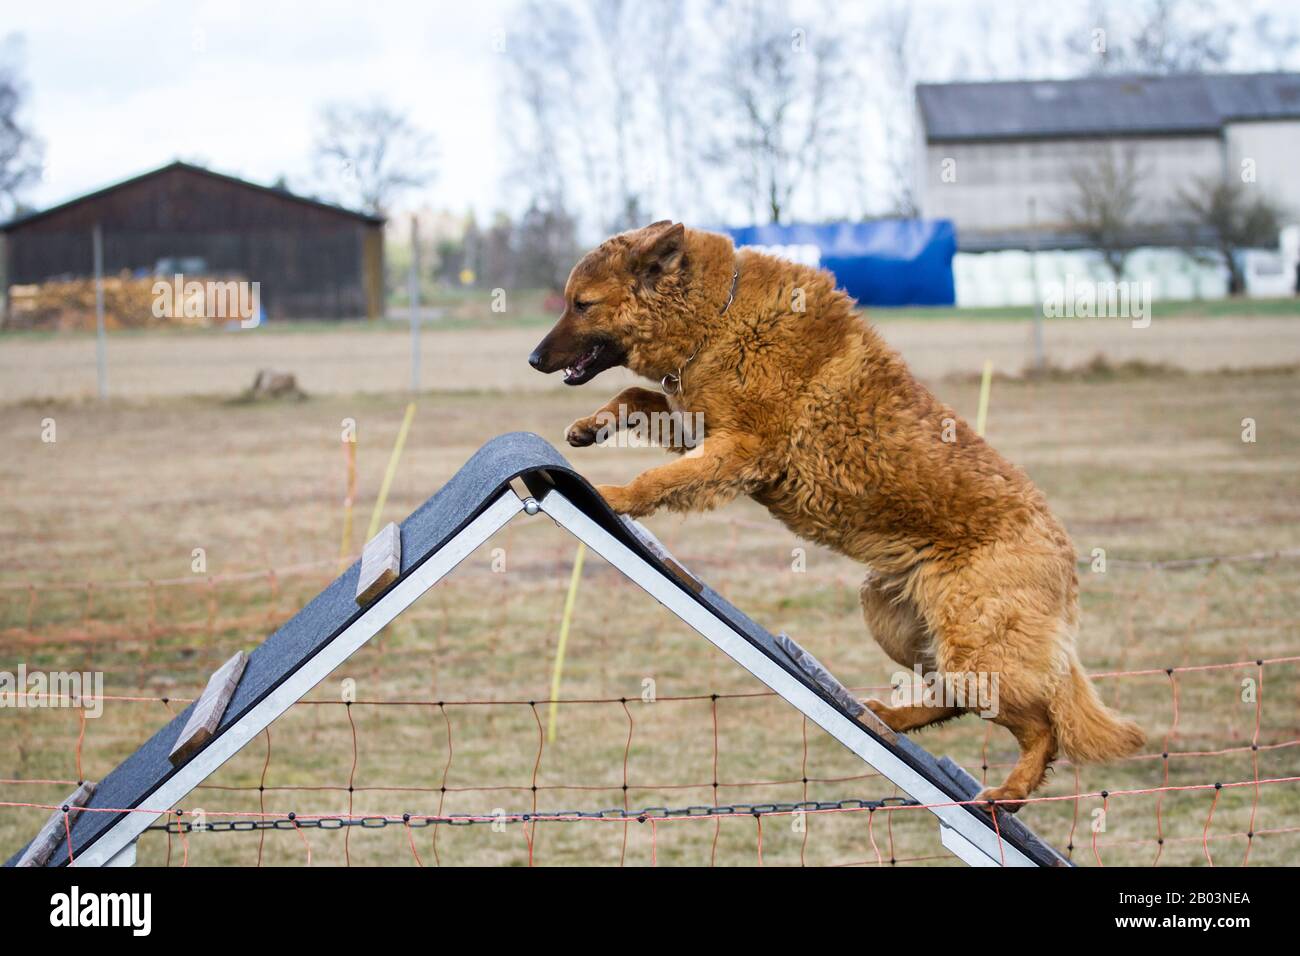 Westerwälder Kuhhund (Altdeutscher Hütehund, Old German Sheepdog) running over the A-frame on the dog sport facility Stock Photo